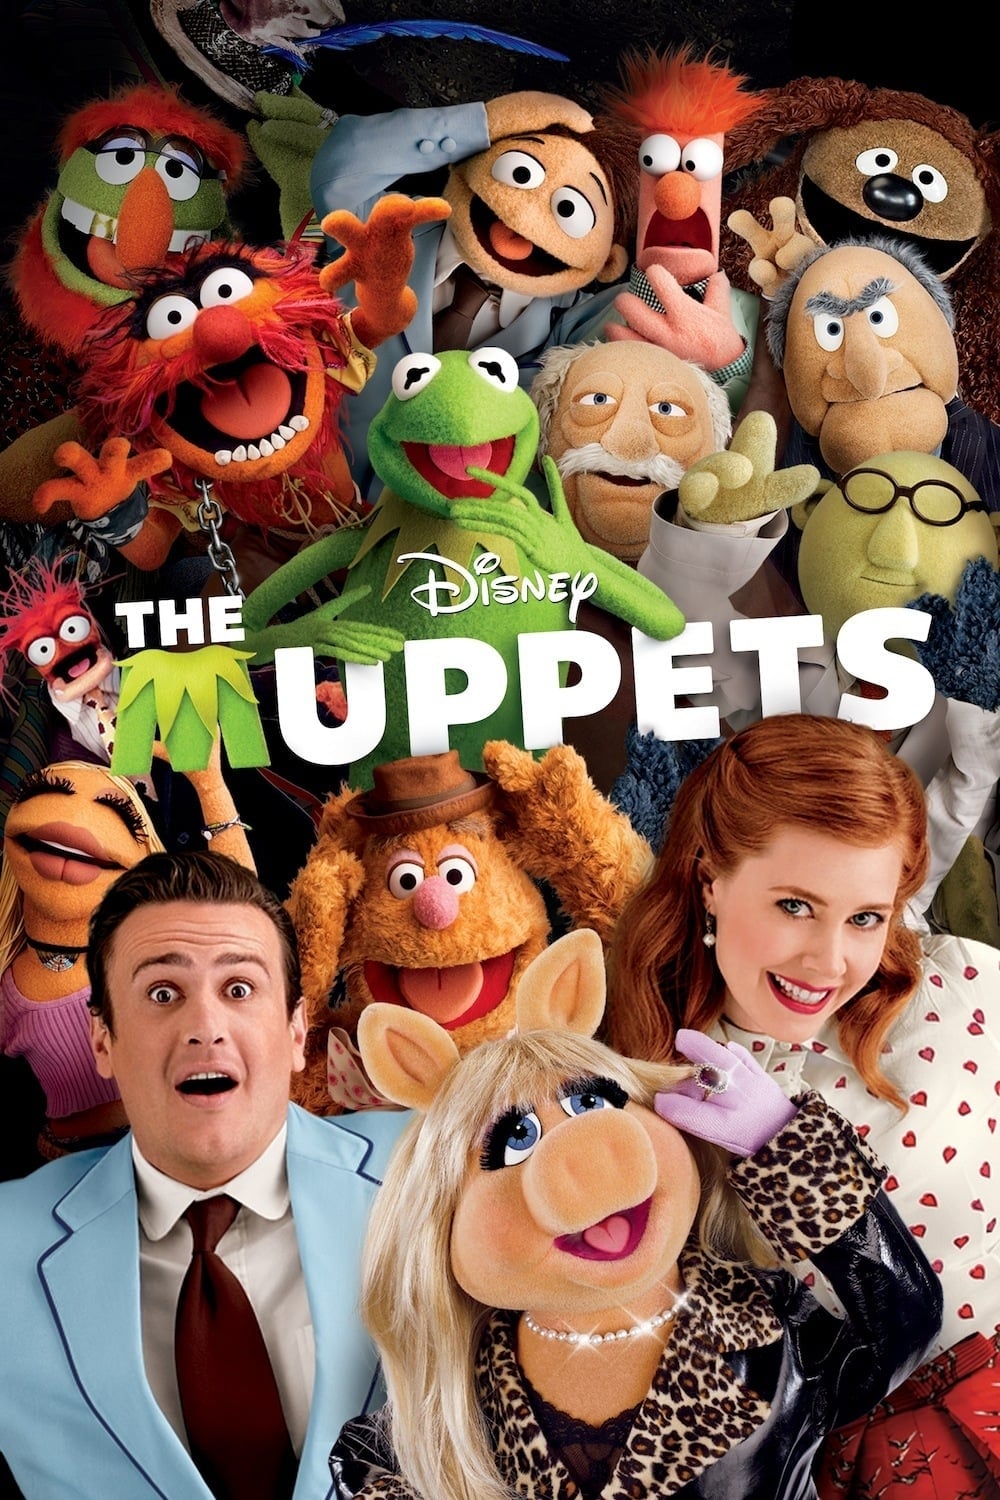 Los Muppets (2011)